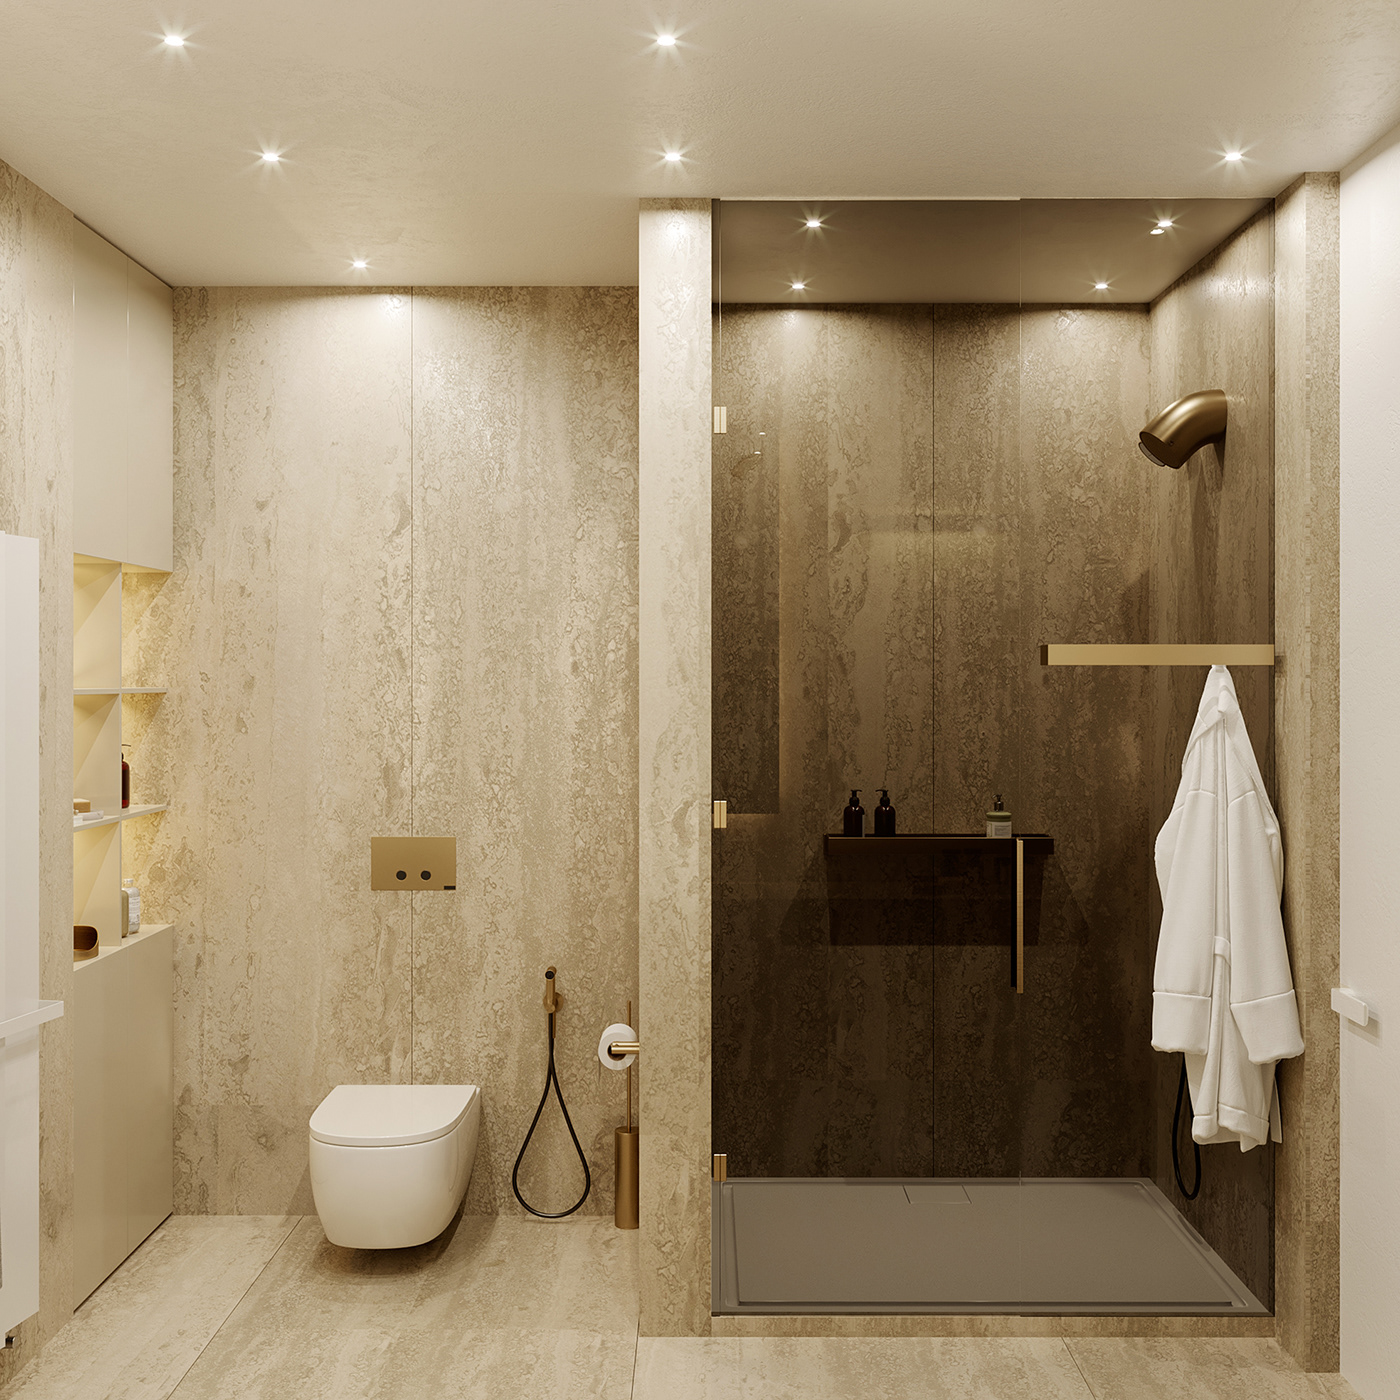 Image may contain: indoor, bathroom and plumbing fixture